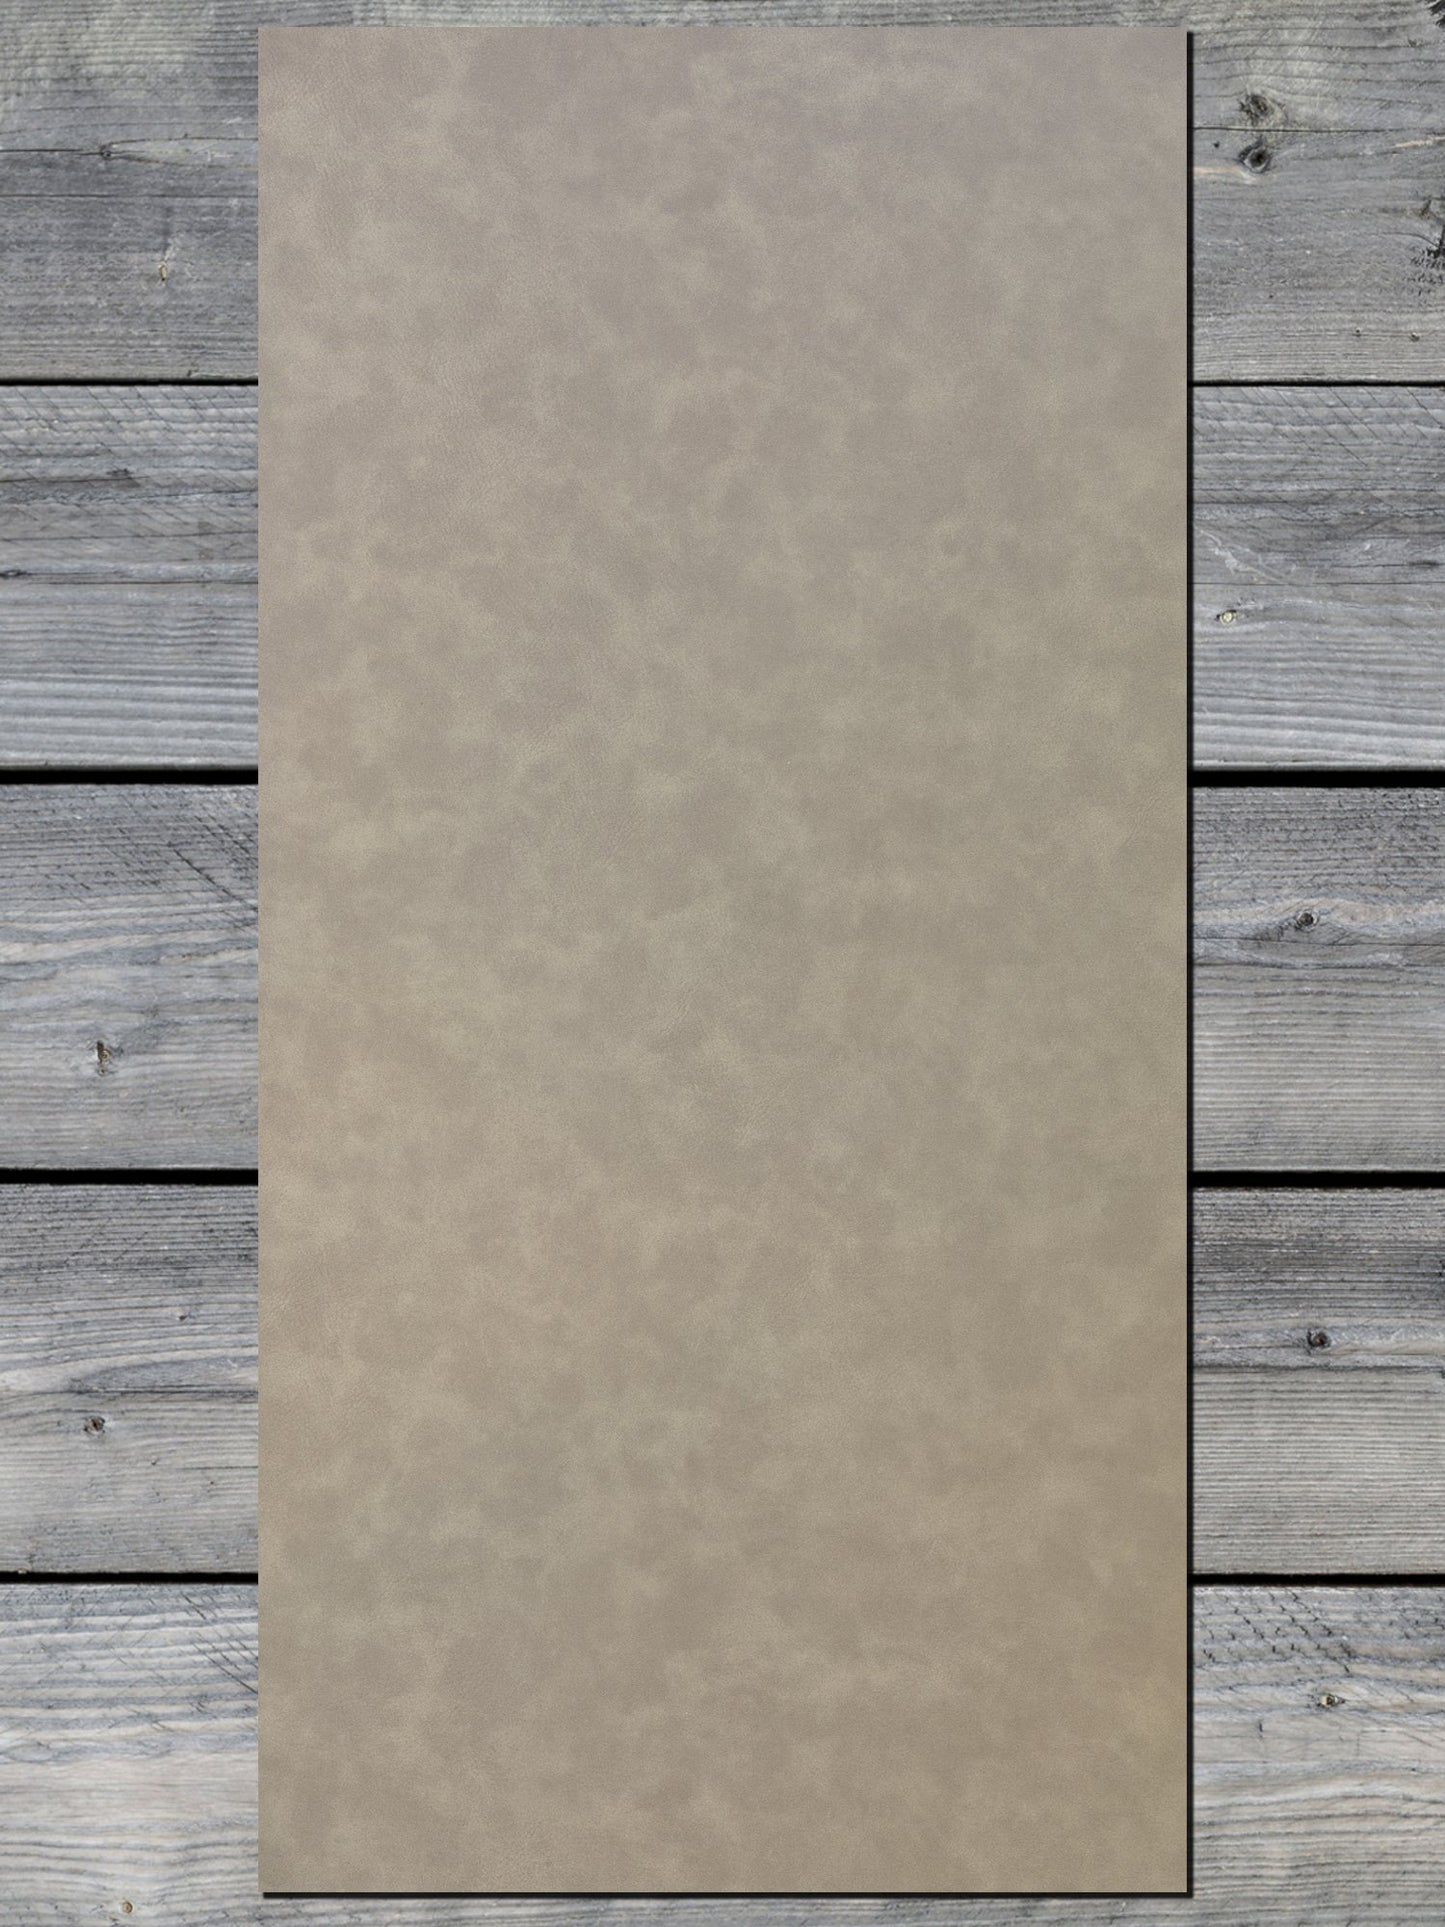 NO-FOAM Light Brown/Black Durra-Bull Leatherette Sheets (12x24) - #LoneStar Adhesive#